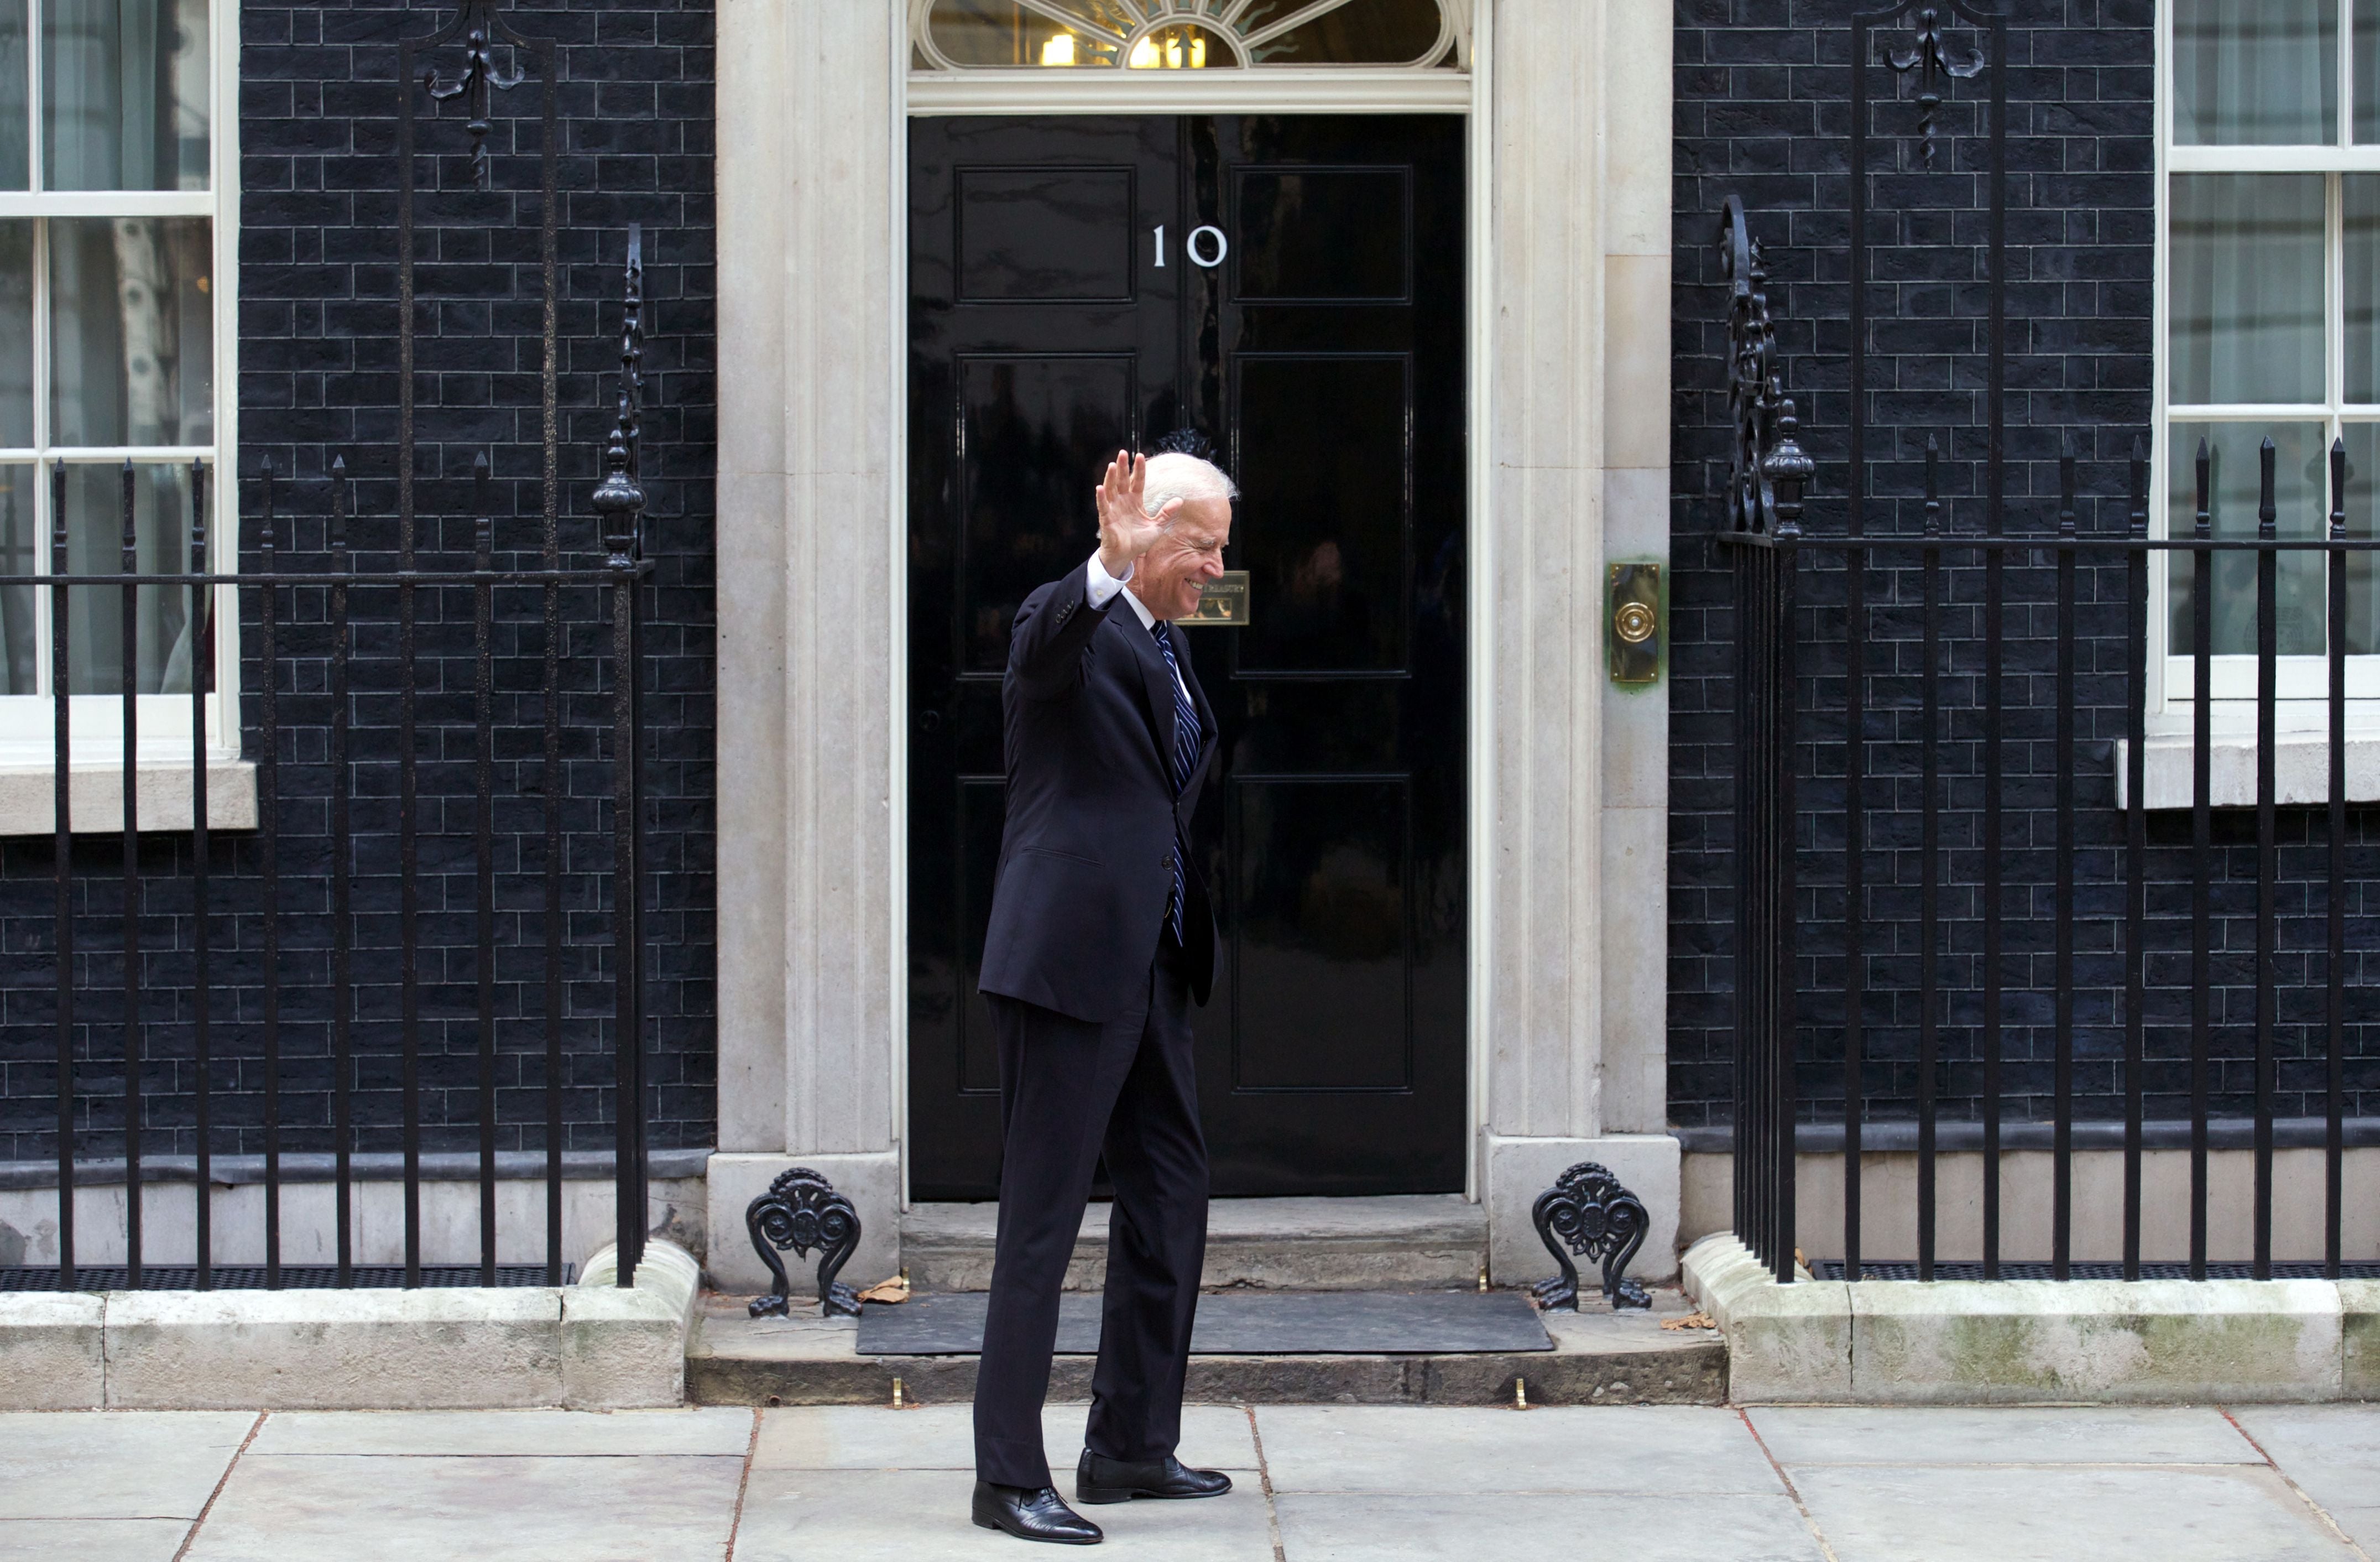 Joe Biden visiting No 10 while vice president, 5 February 2013